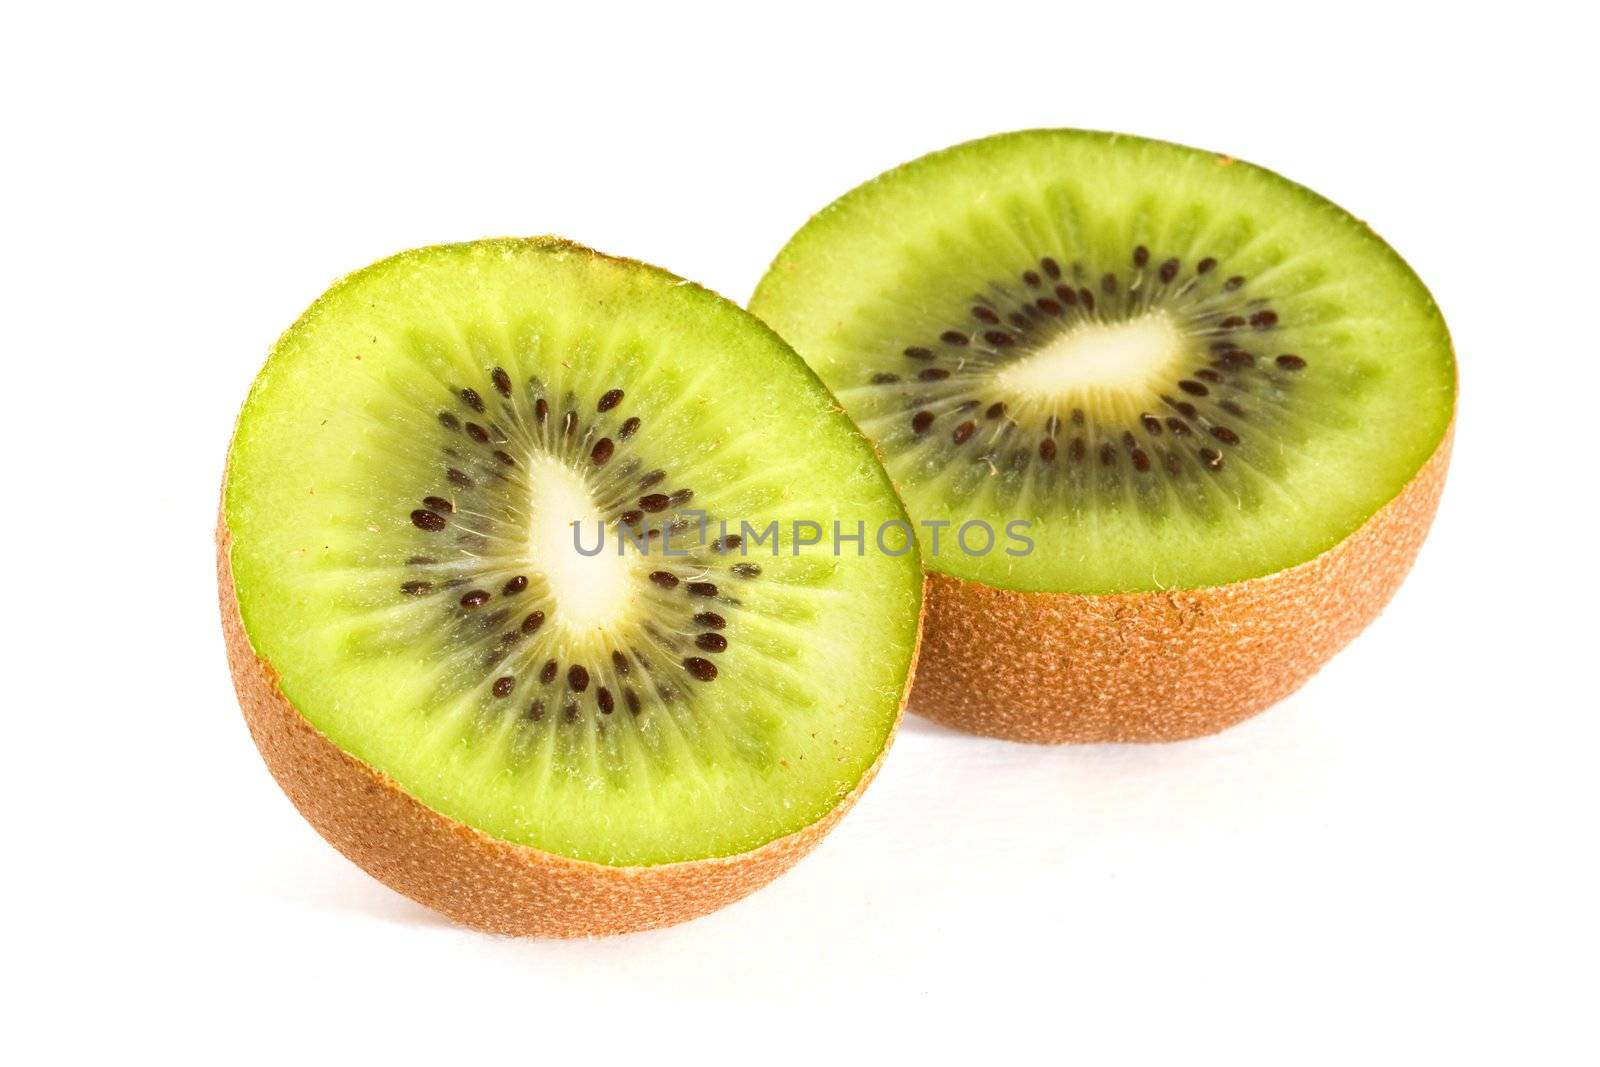 Kiwi slices by stevemc